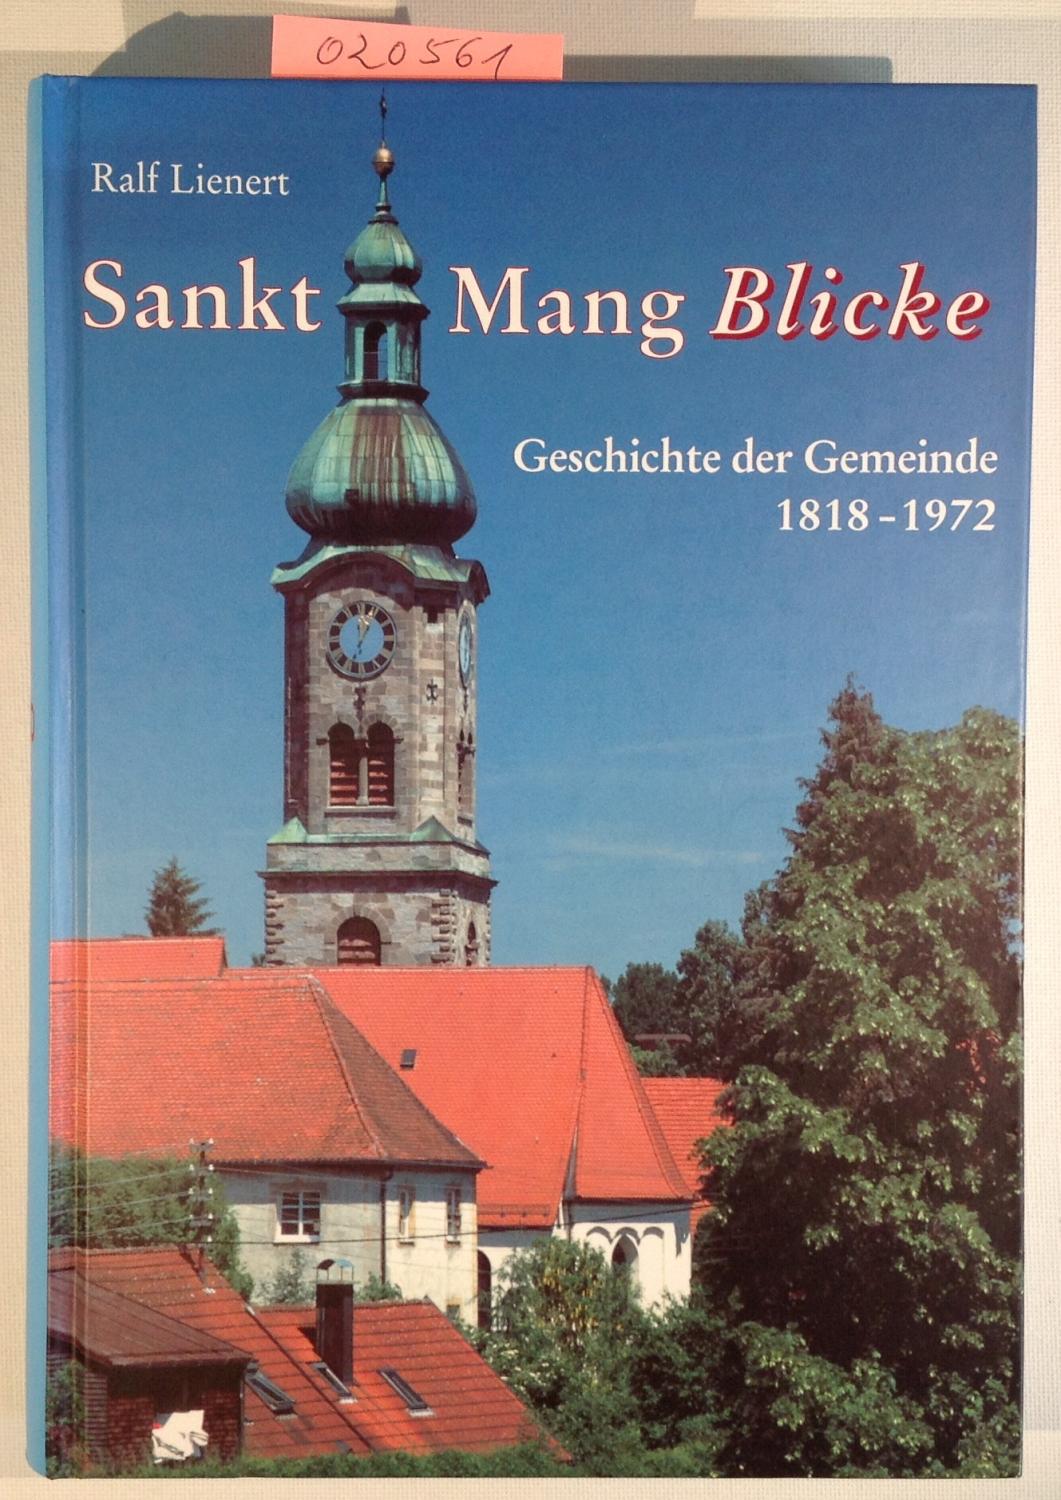 Sankt Mang - Blicke , Geschichte der Gemeinde 1818 - 1972 - Ralf Lienert